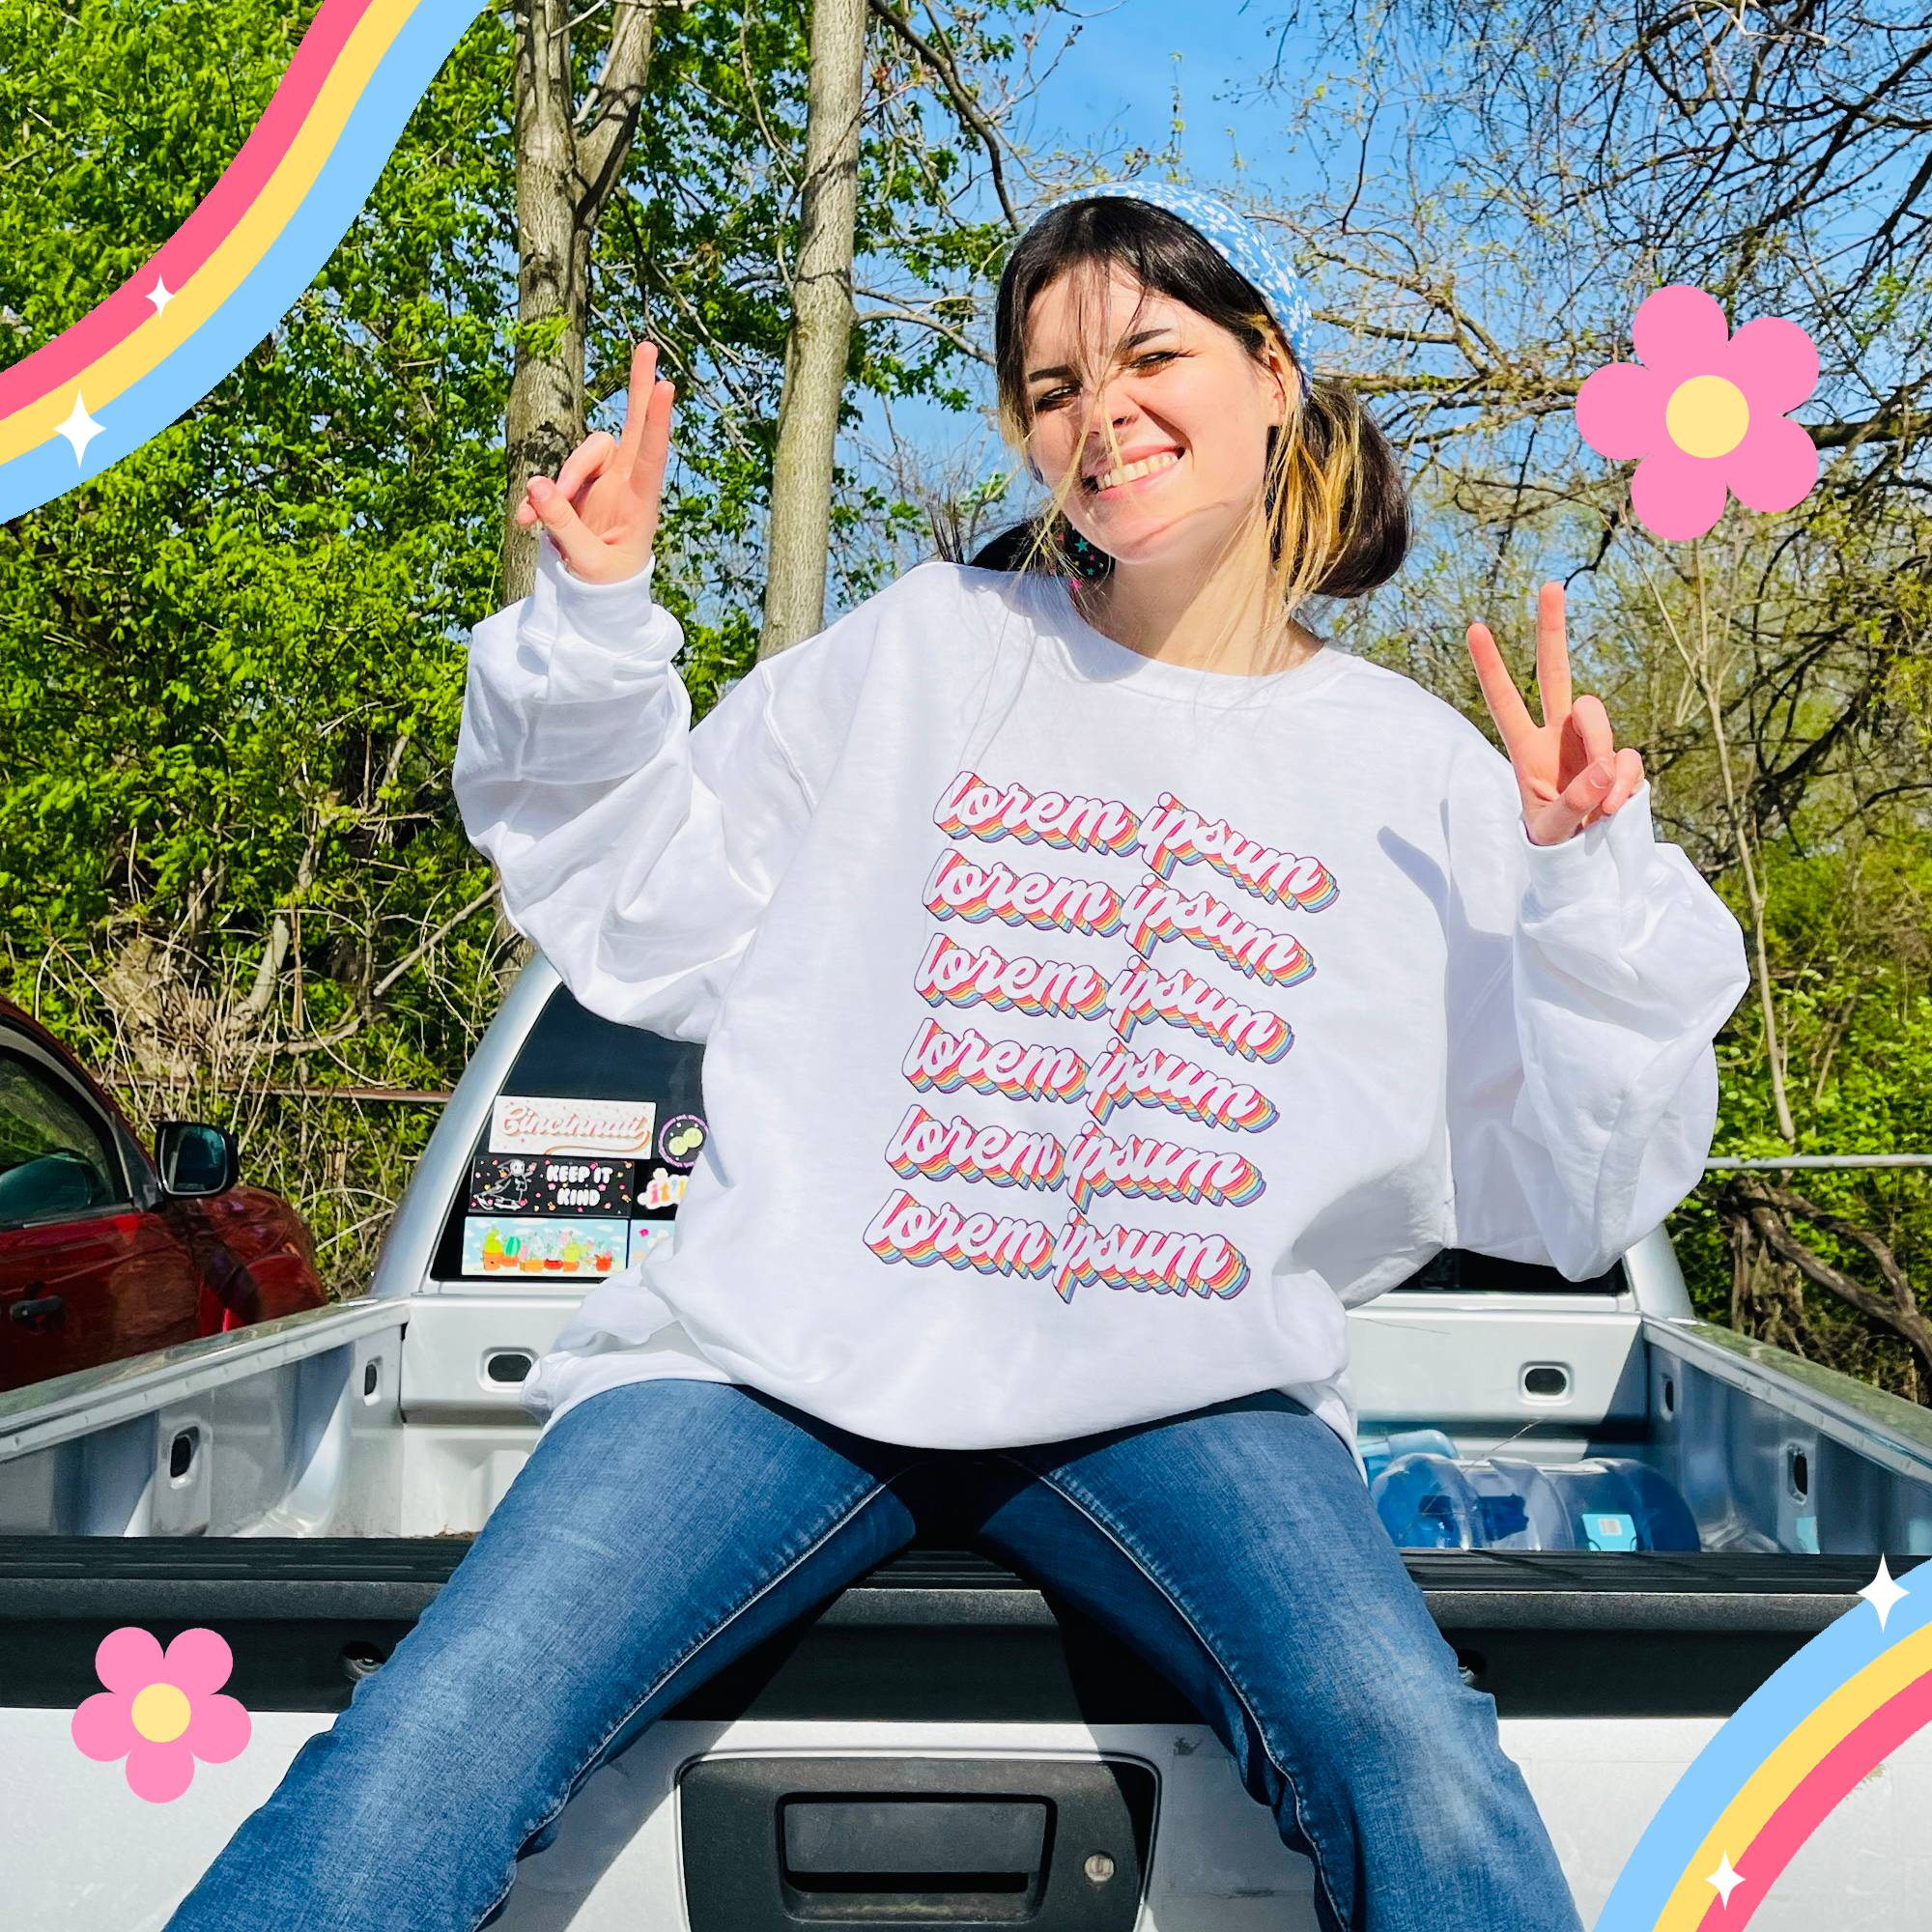 Retro Rainbow Stack Crewneck Sweatshirt - Personalize it with your custom text!